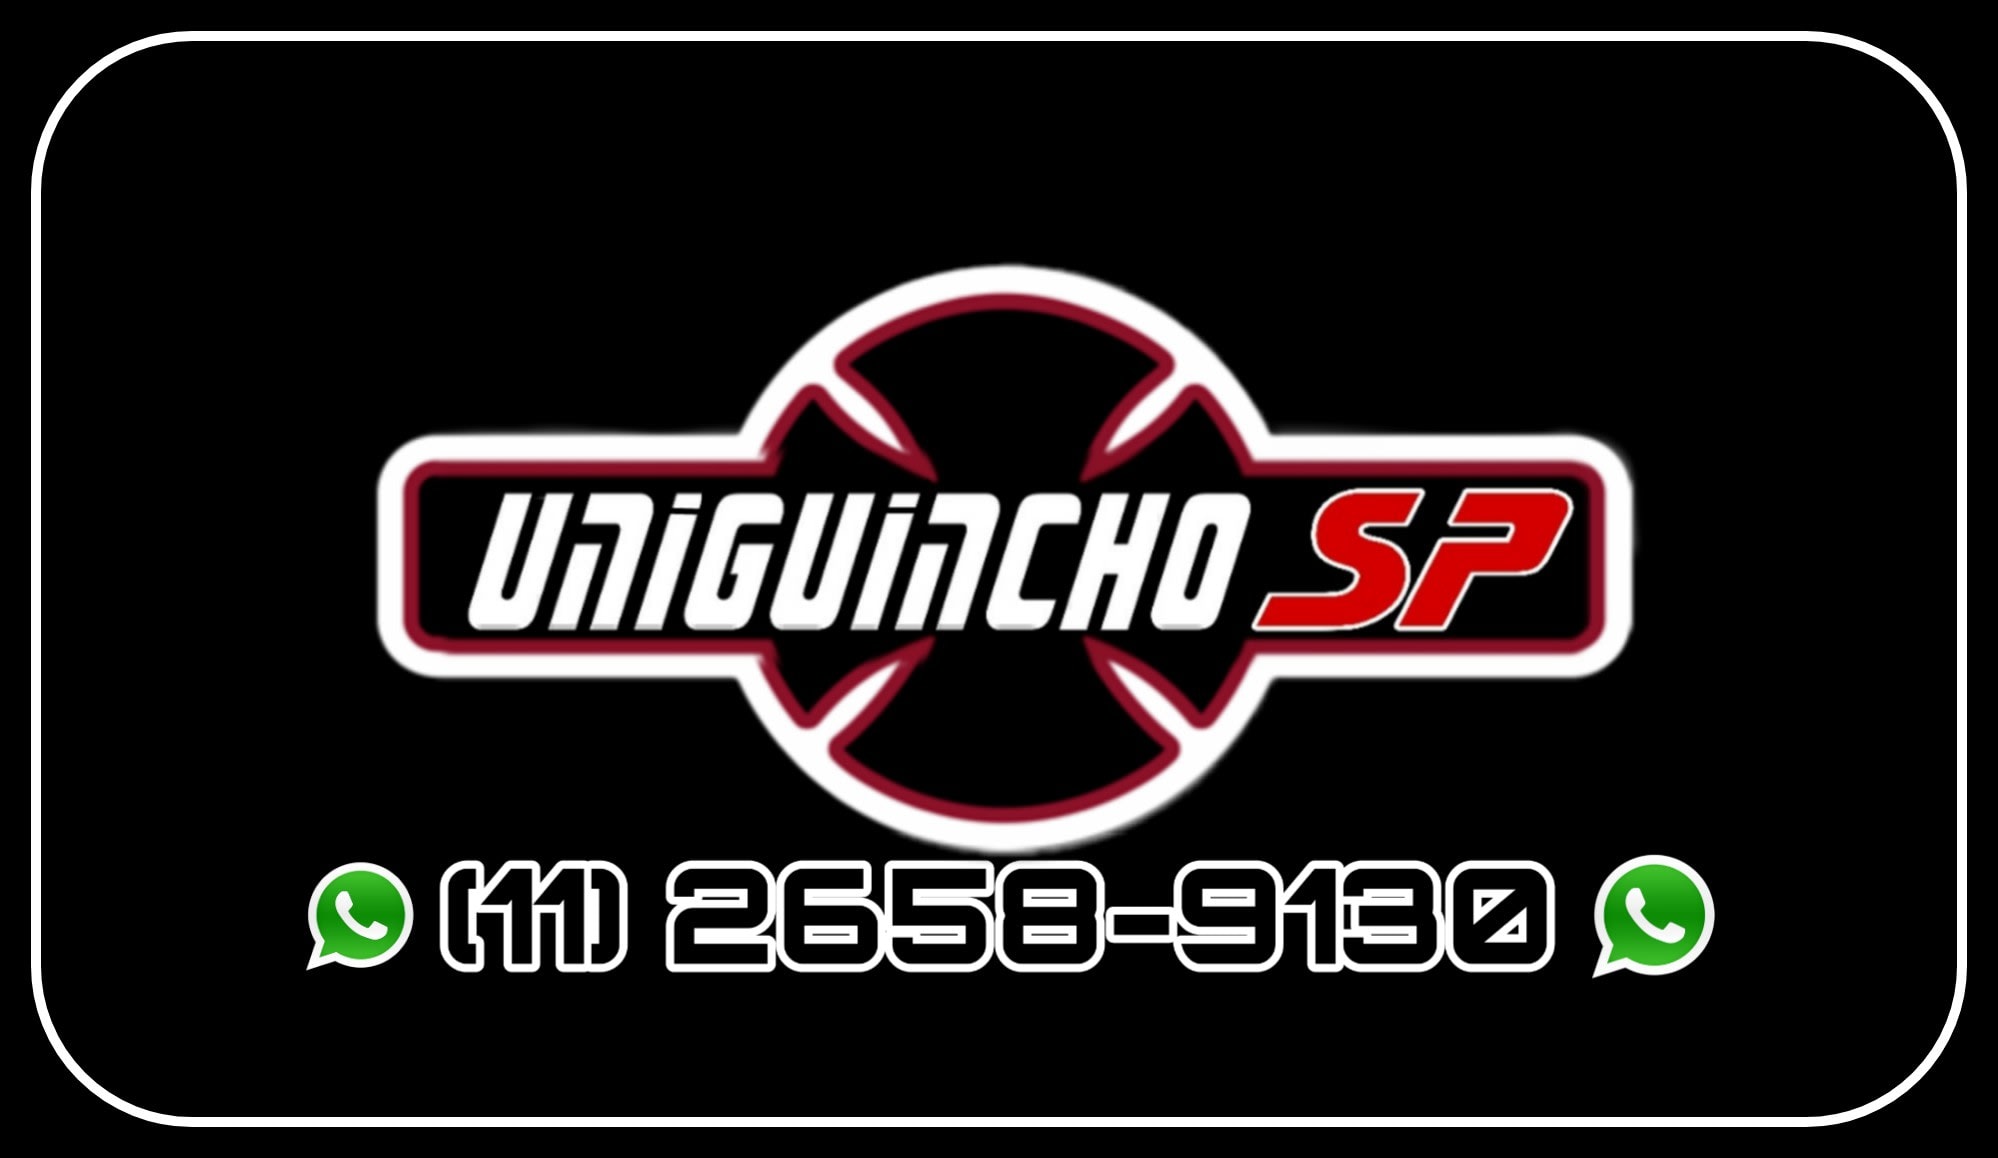 Uniguincho SP